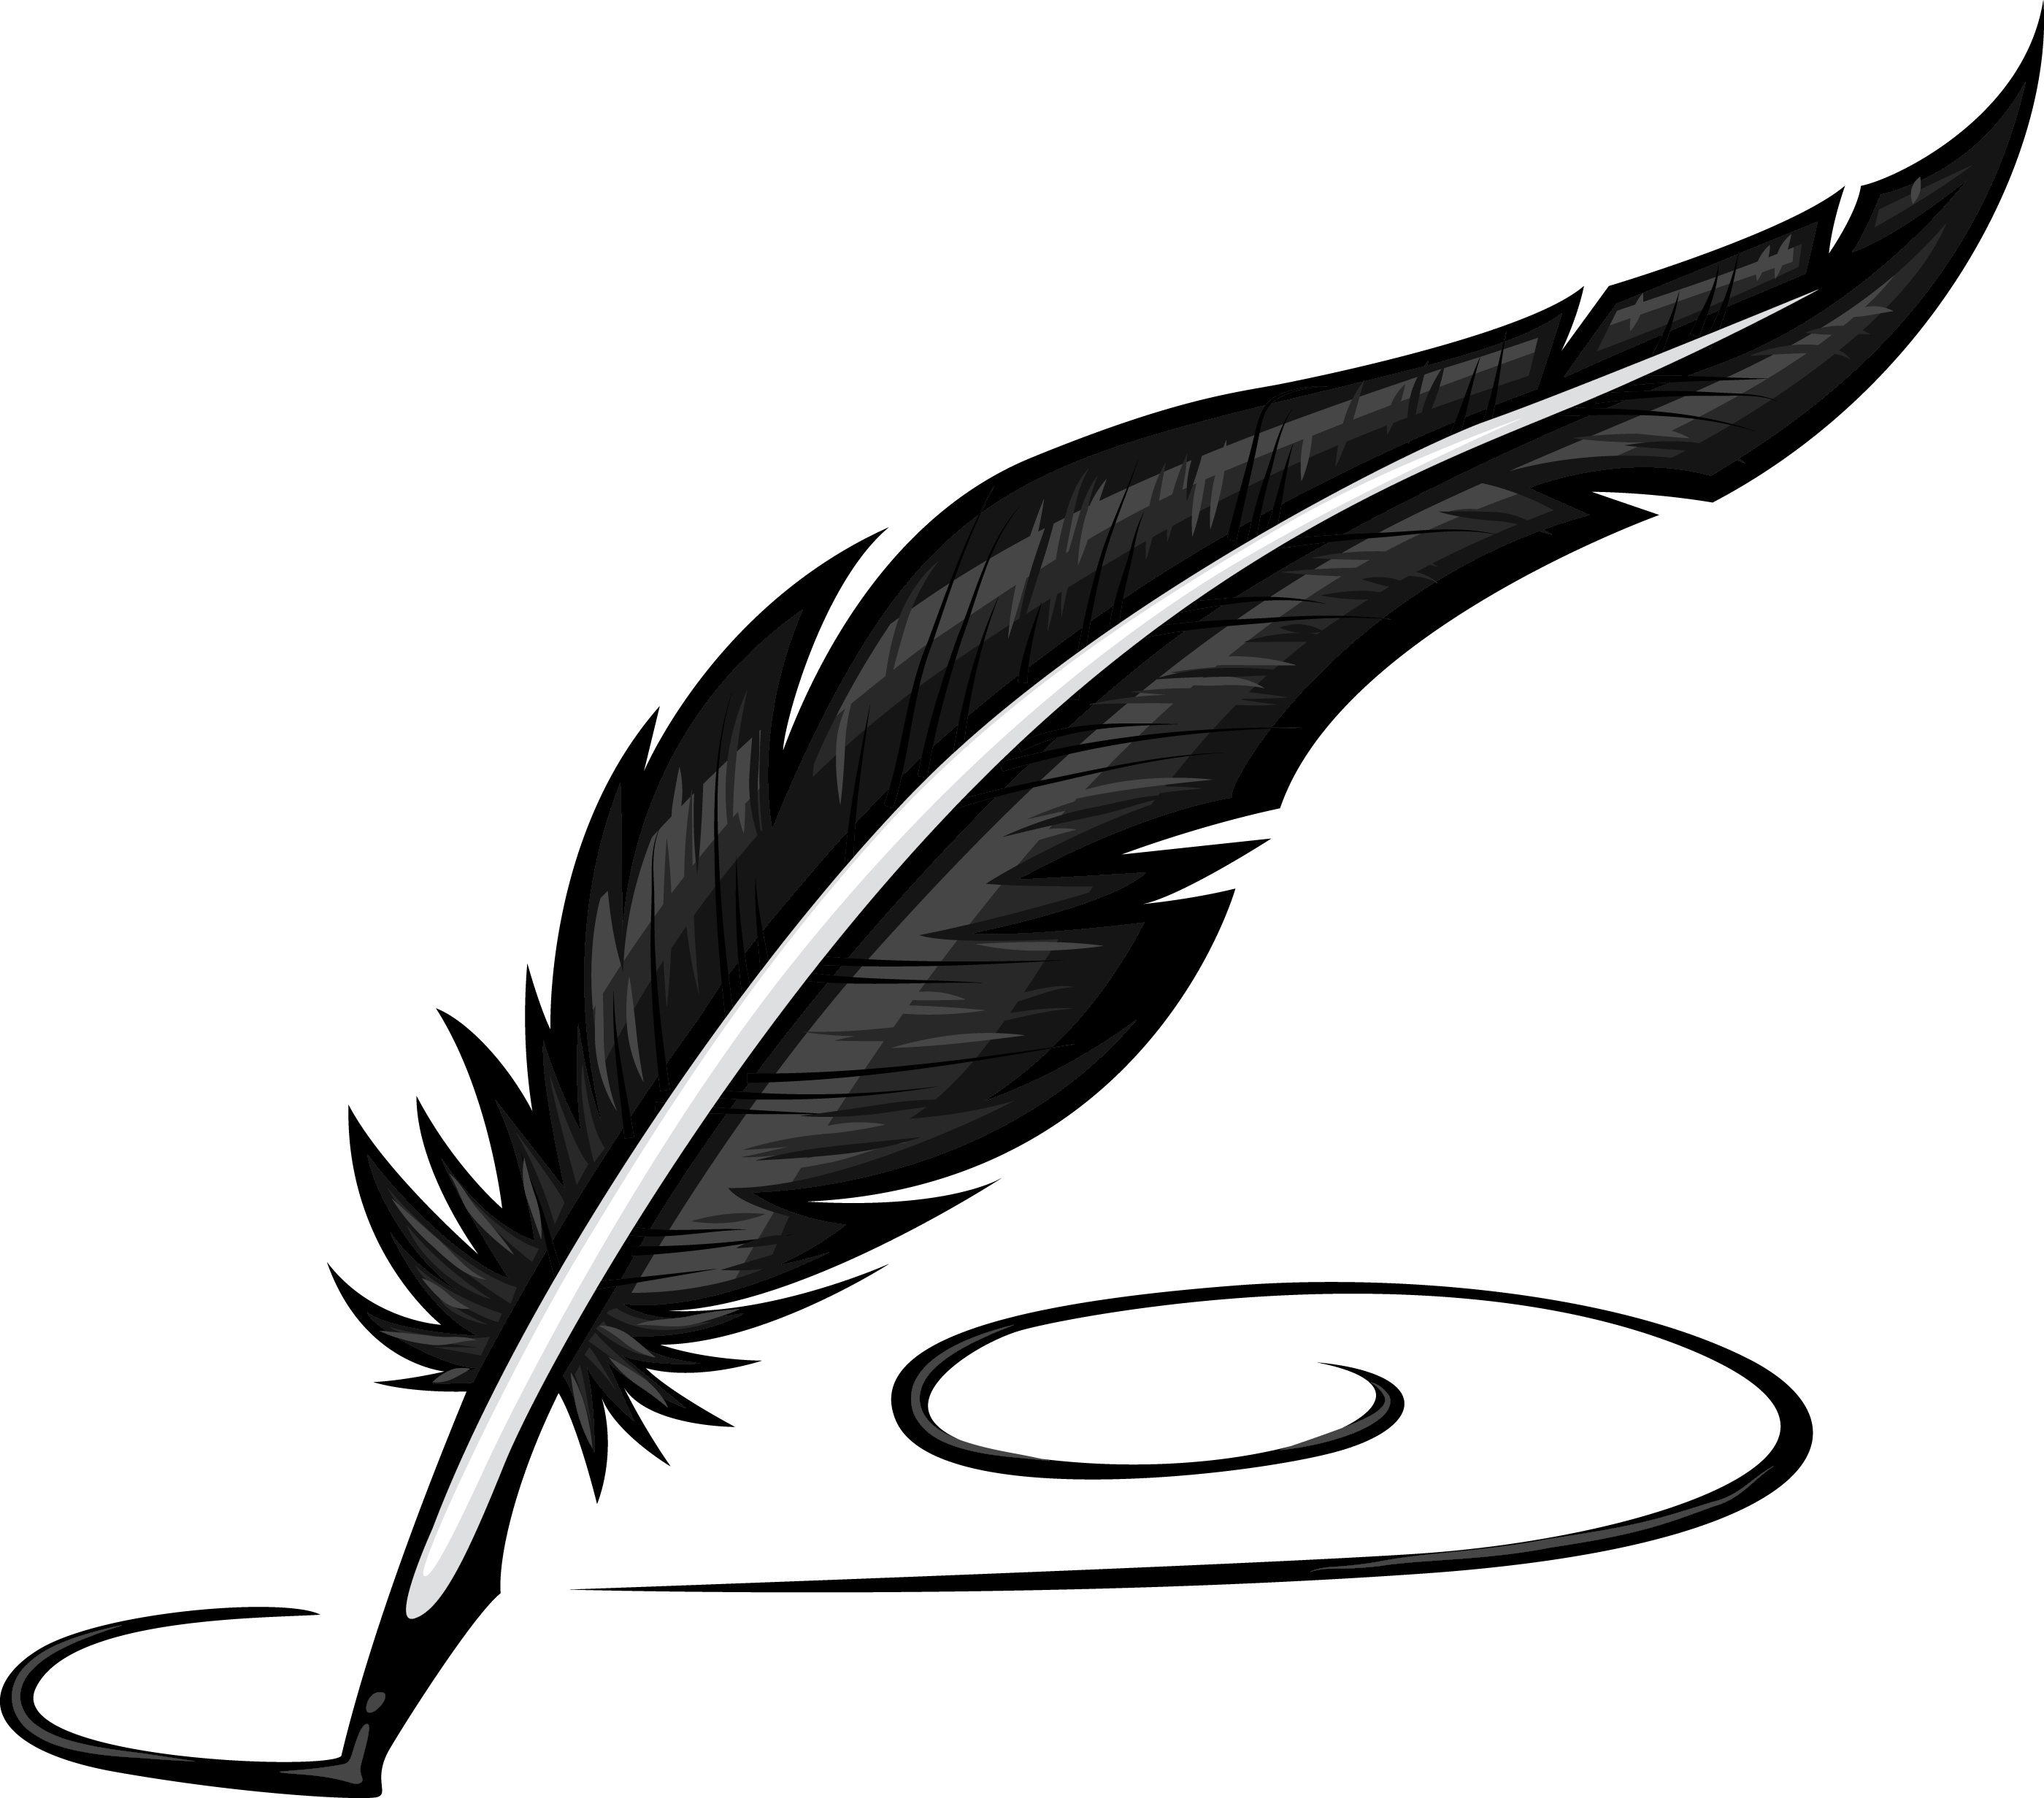 Feather pen clip art